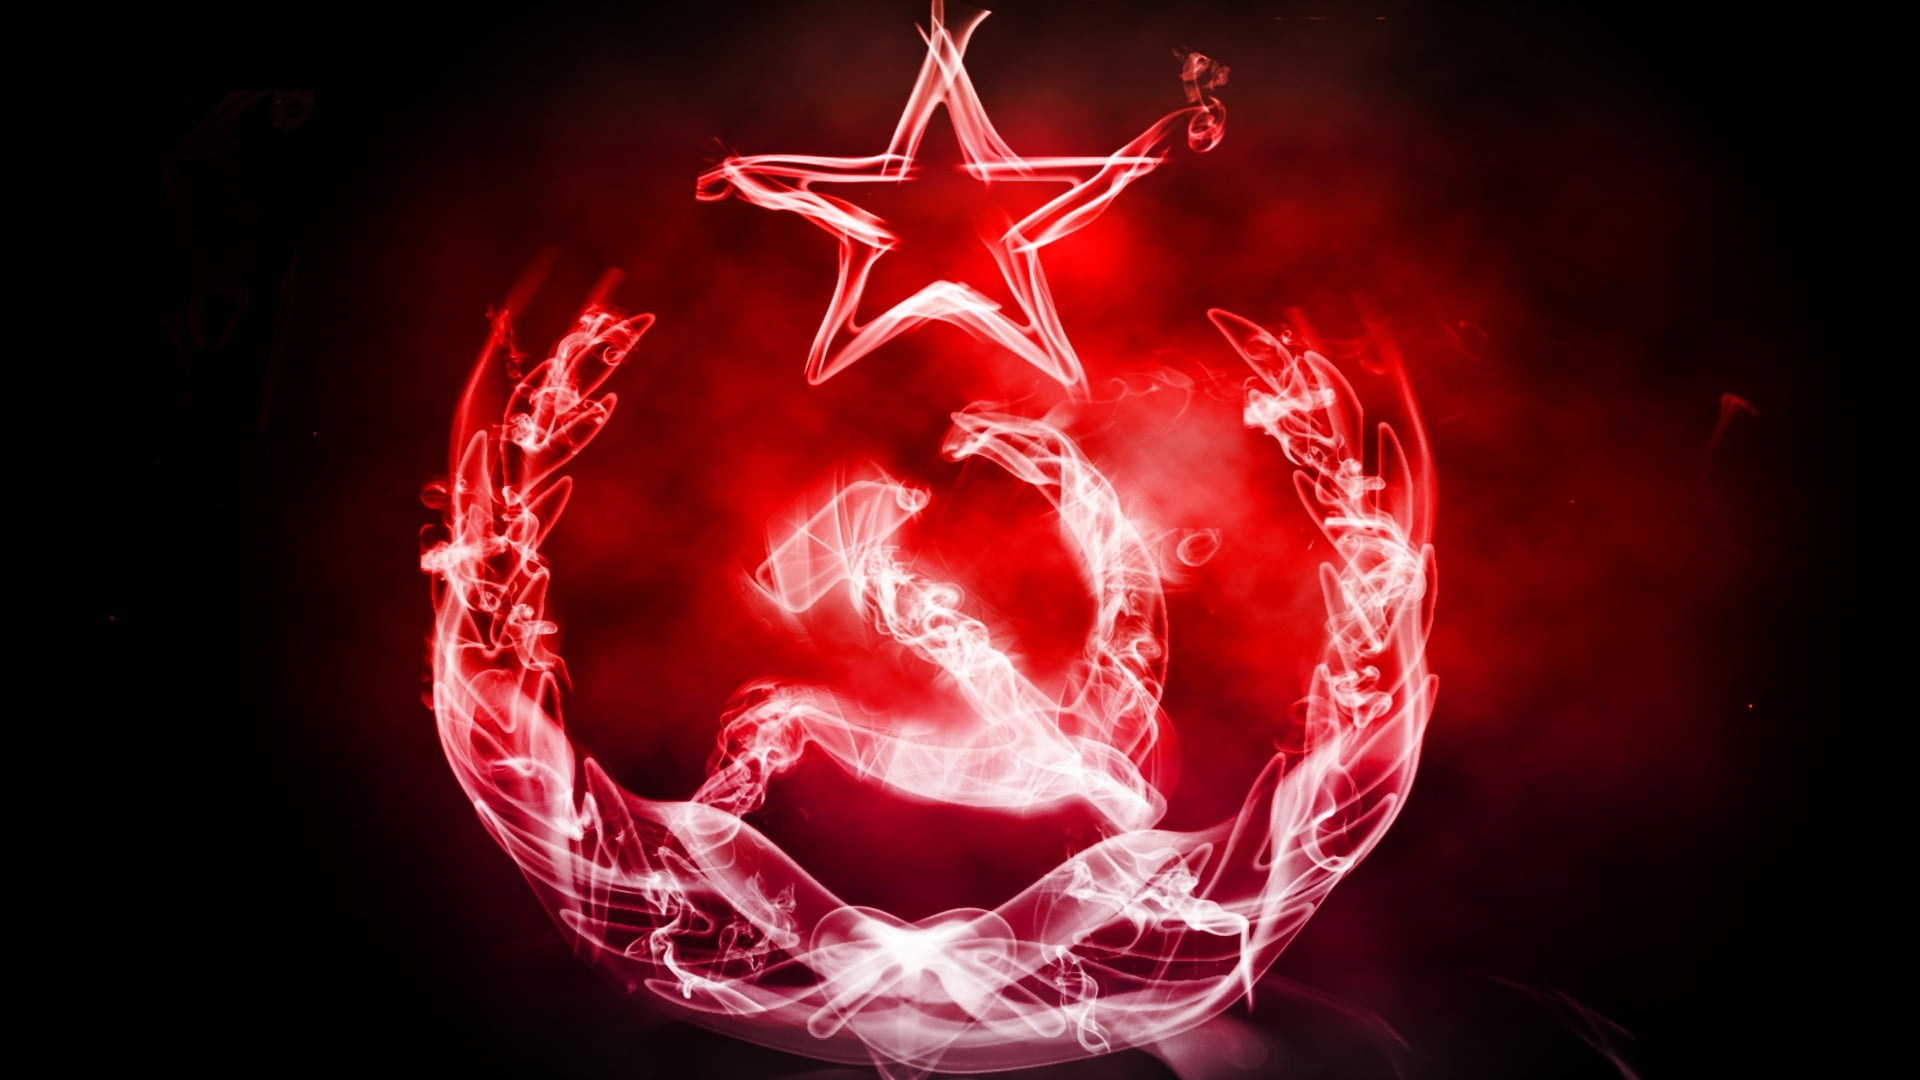 Soviet emblem, USSR, Russia